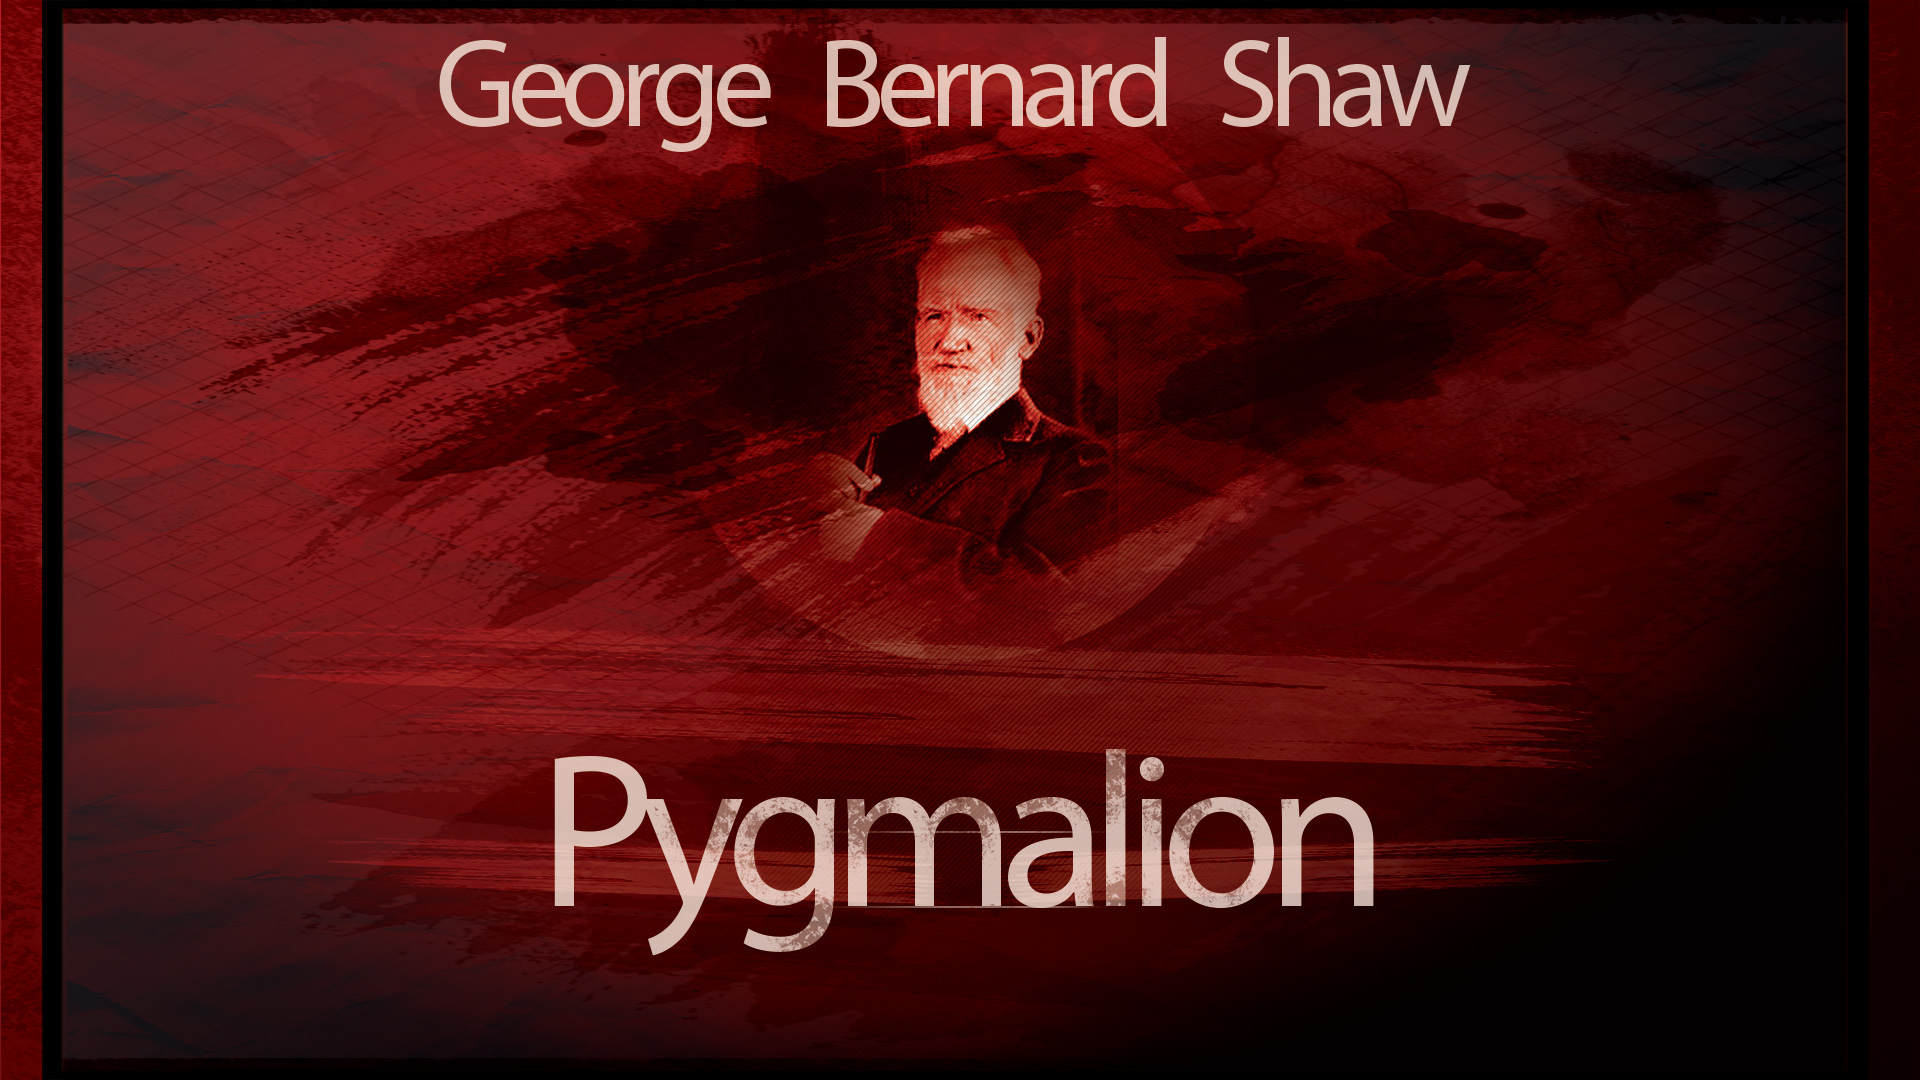 shaw george bernard pygmalion